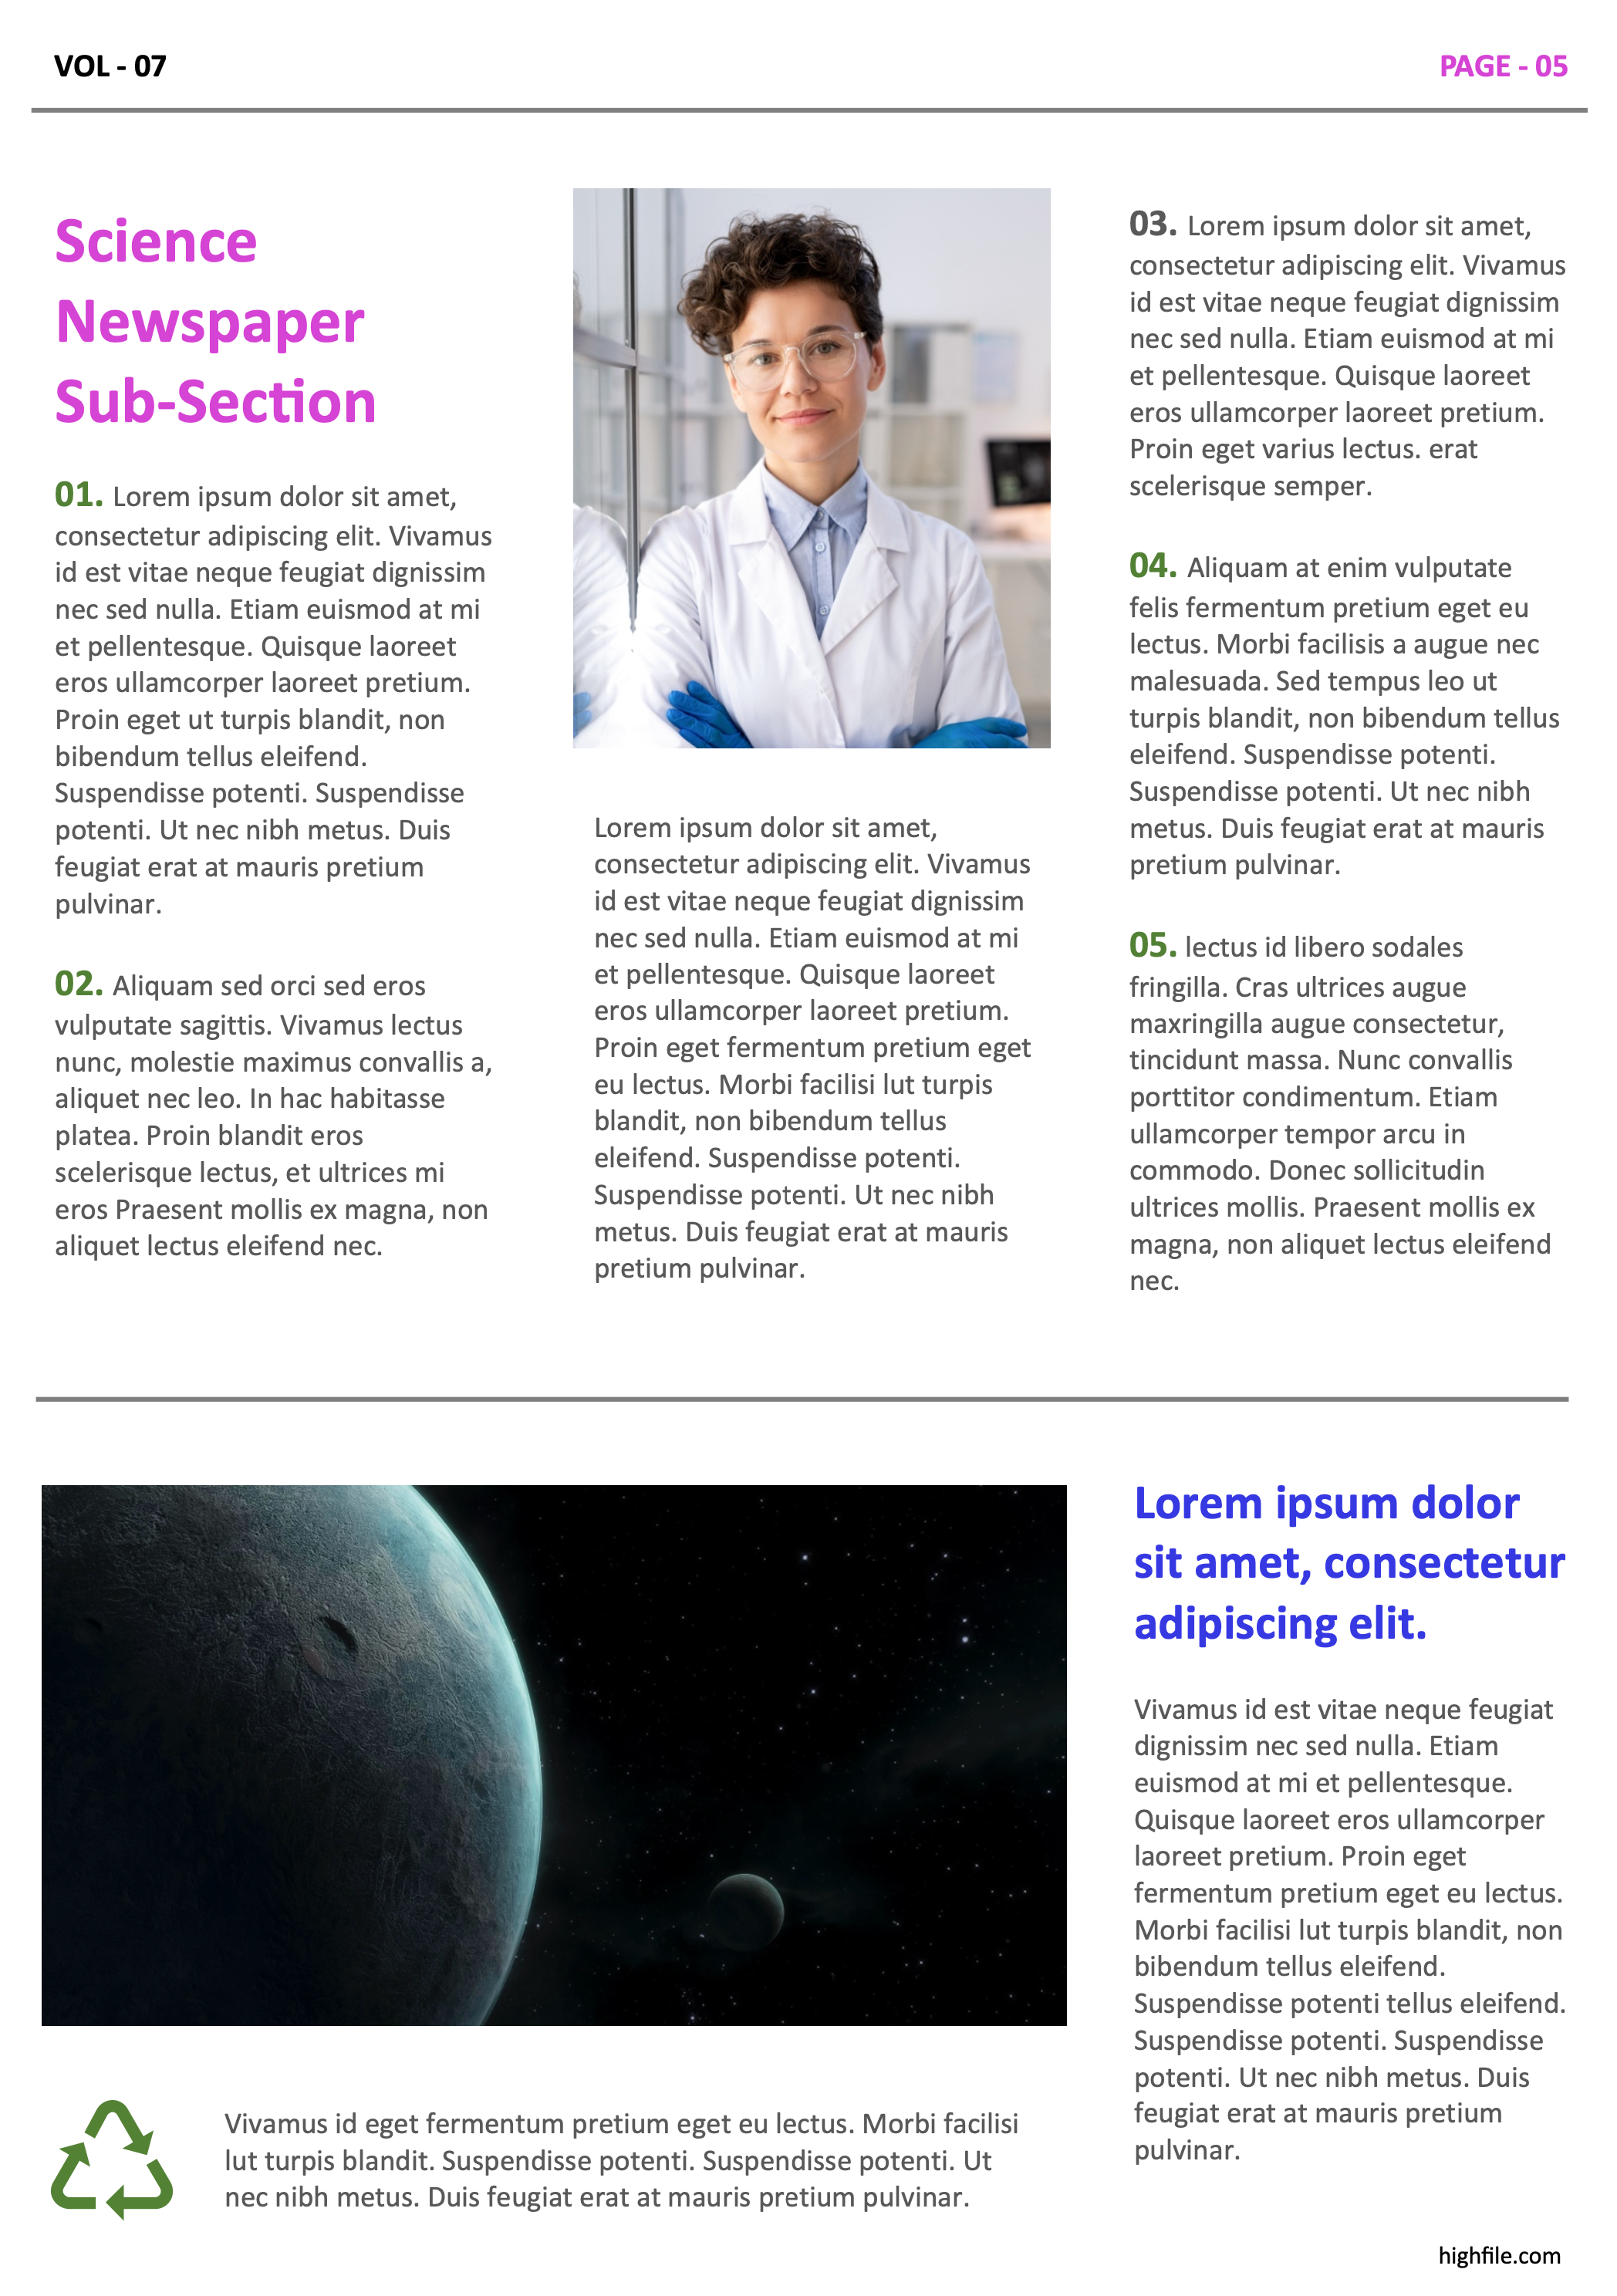 Scientific Newspaper Template - Page 05